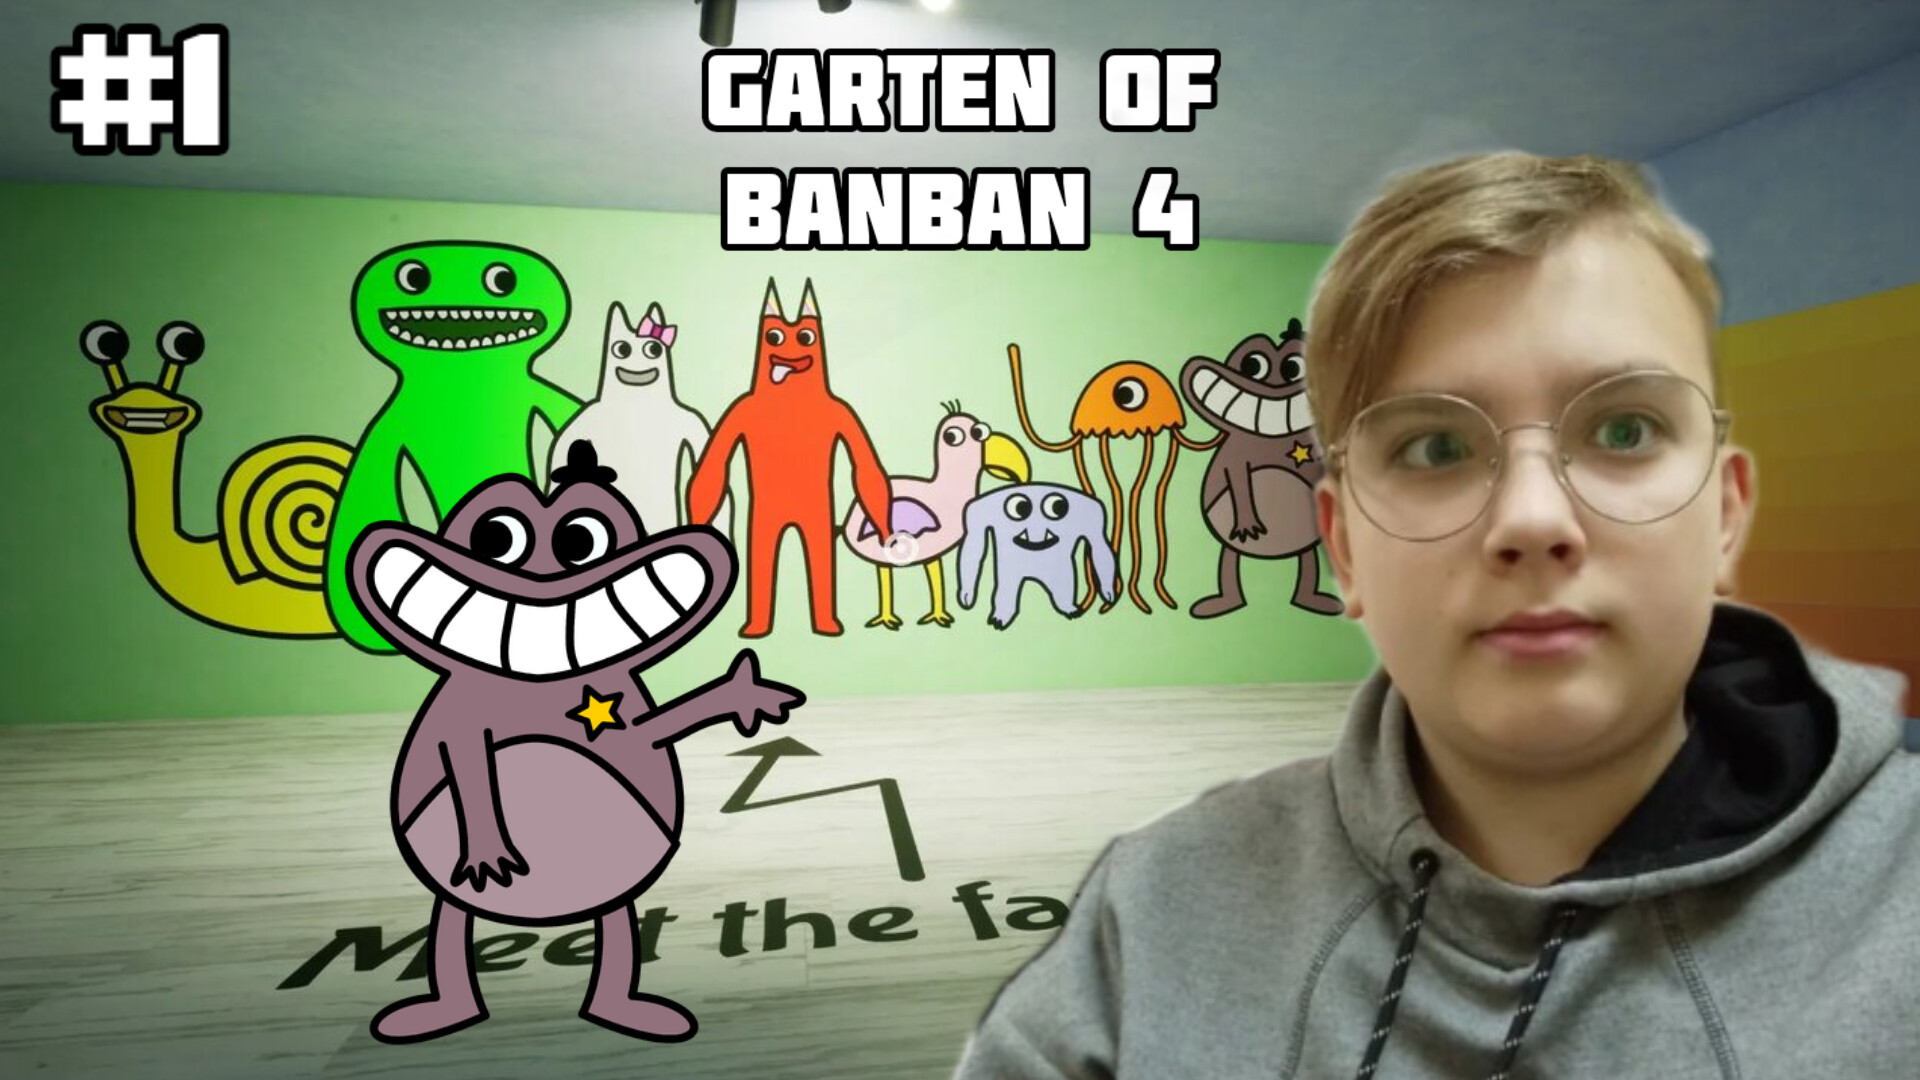 БАНБАН 4 ОГО -- Garten of Banban 4 #1